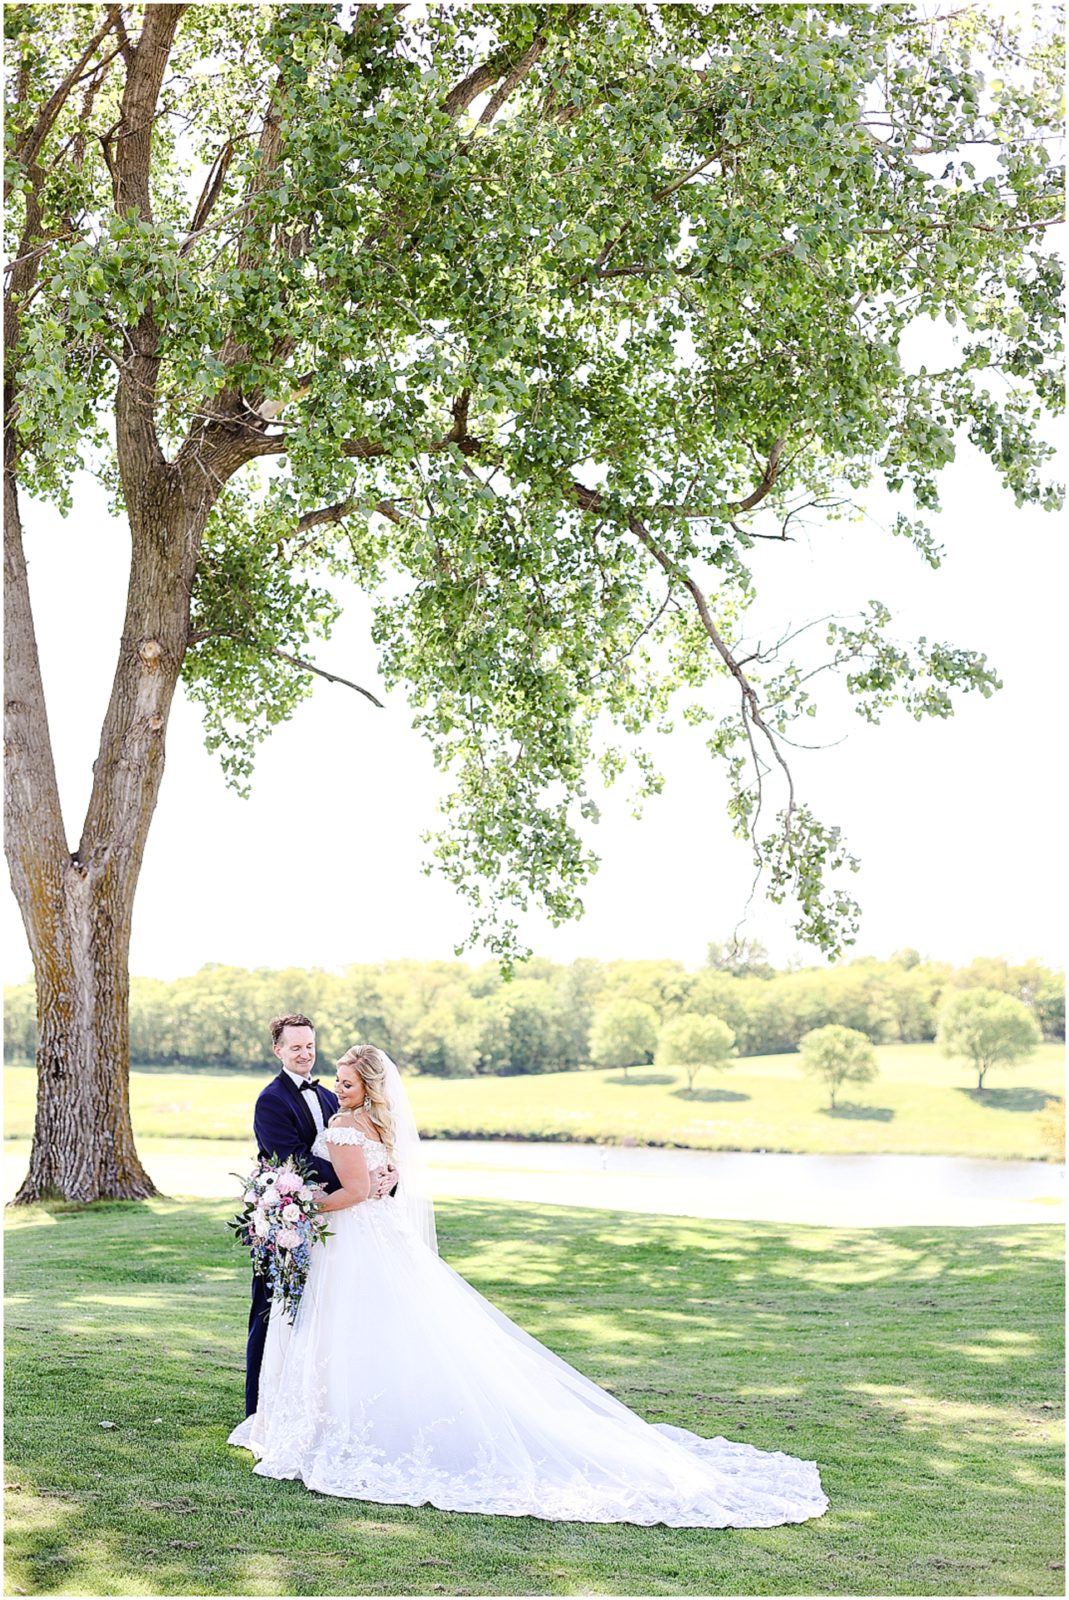 gorgeous wedding photo under a tree - Lake Mozingo Wedding - Kansas City Wedding Photographer - Beautiful Wedding portraits on a golf course - mozingo golf club - bride & groom portraits